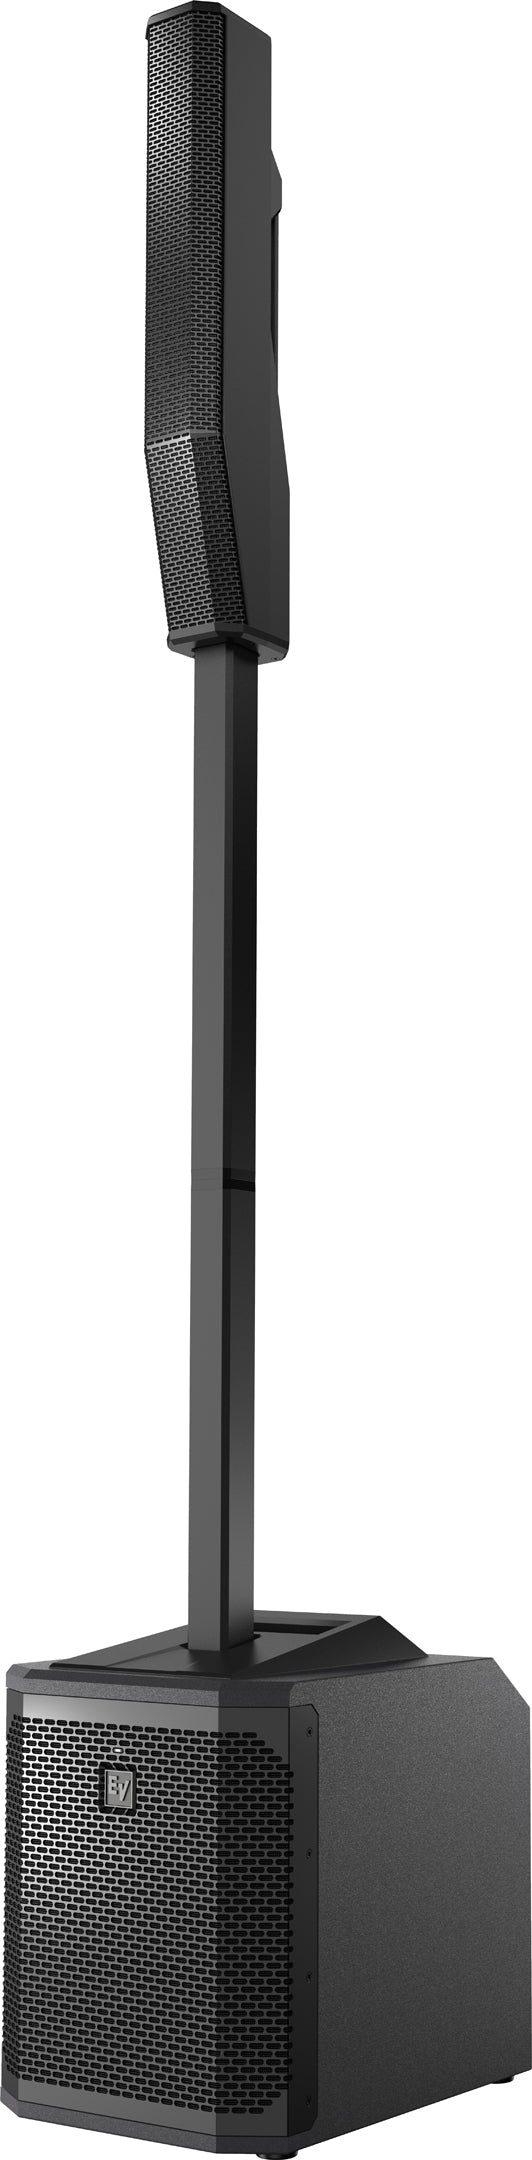 Electro-Voice Evolve 30M Portable Powered Column System, Black